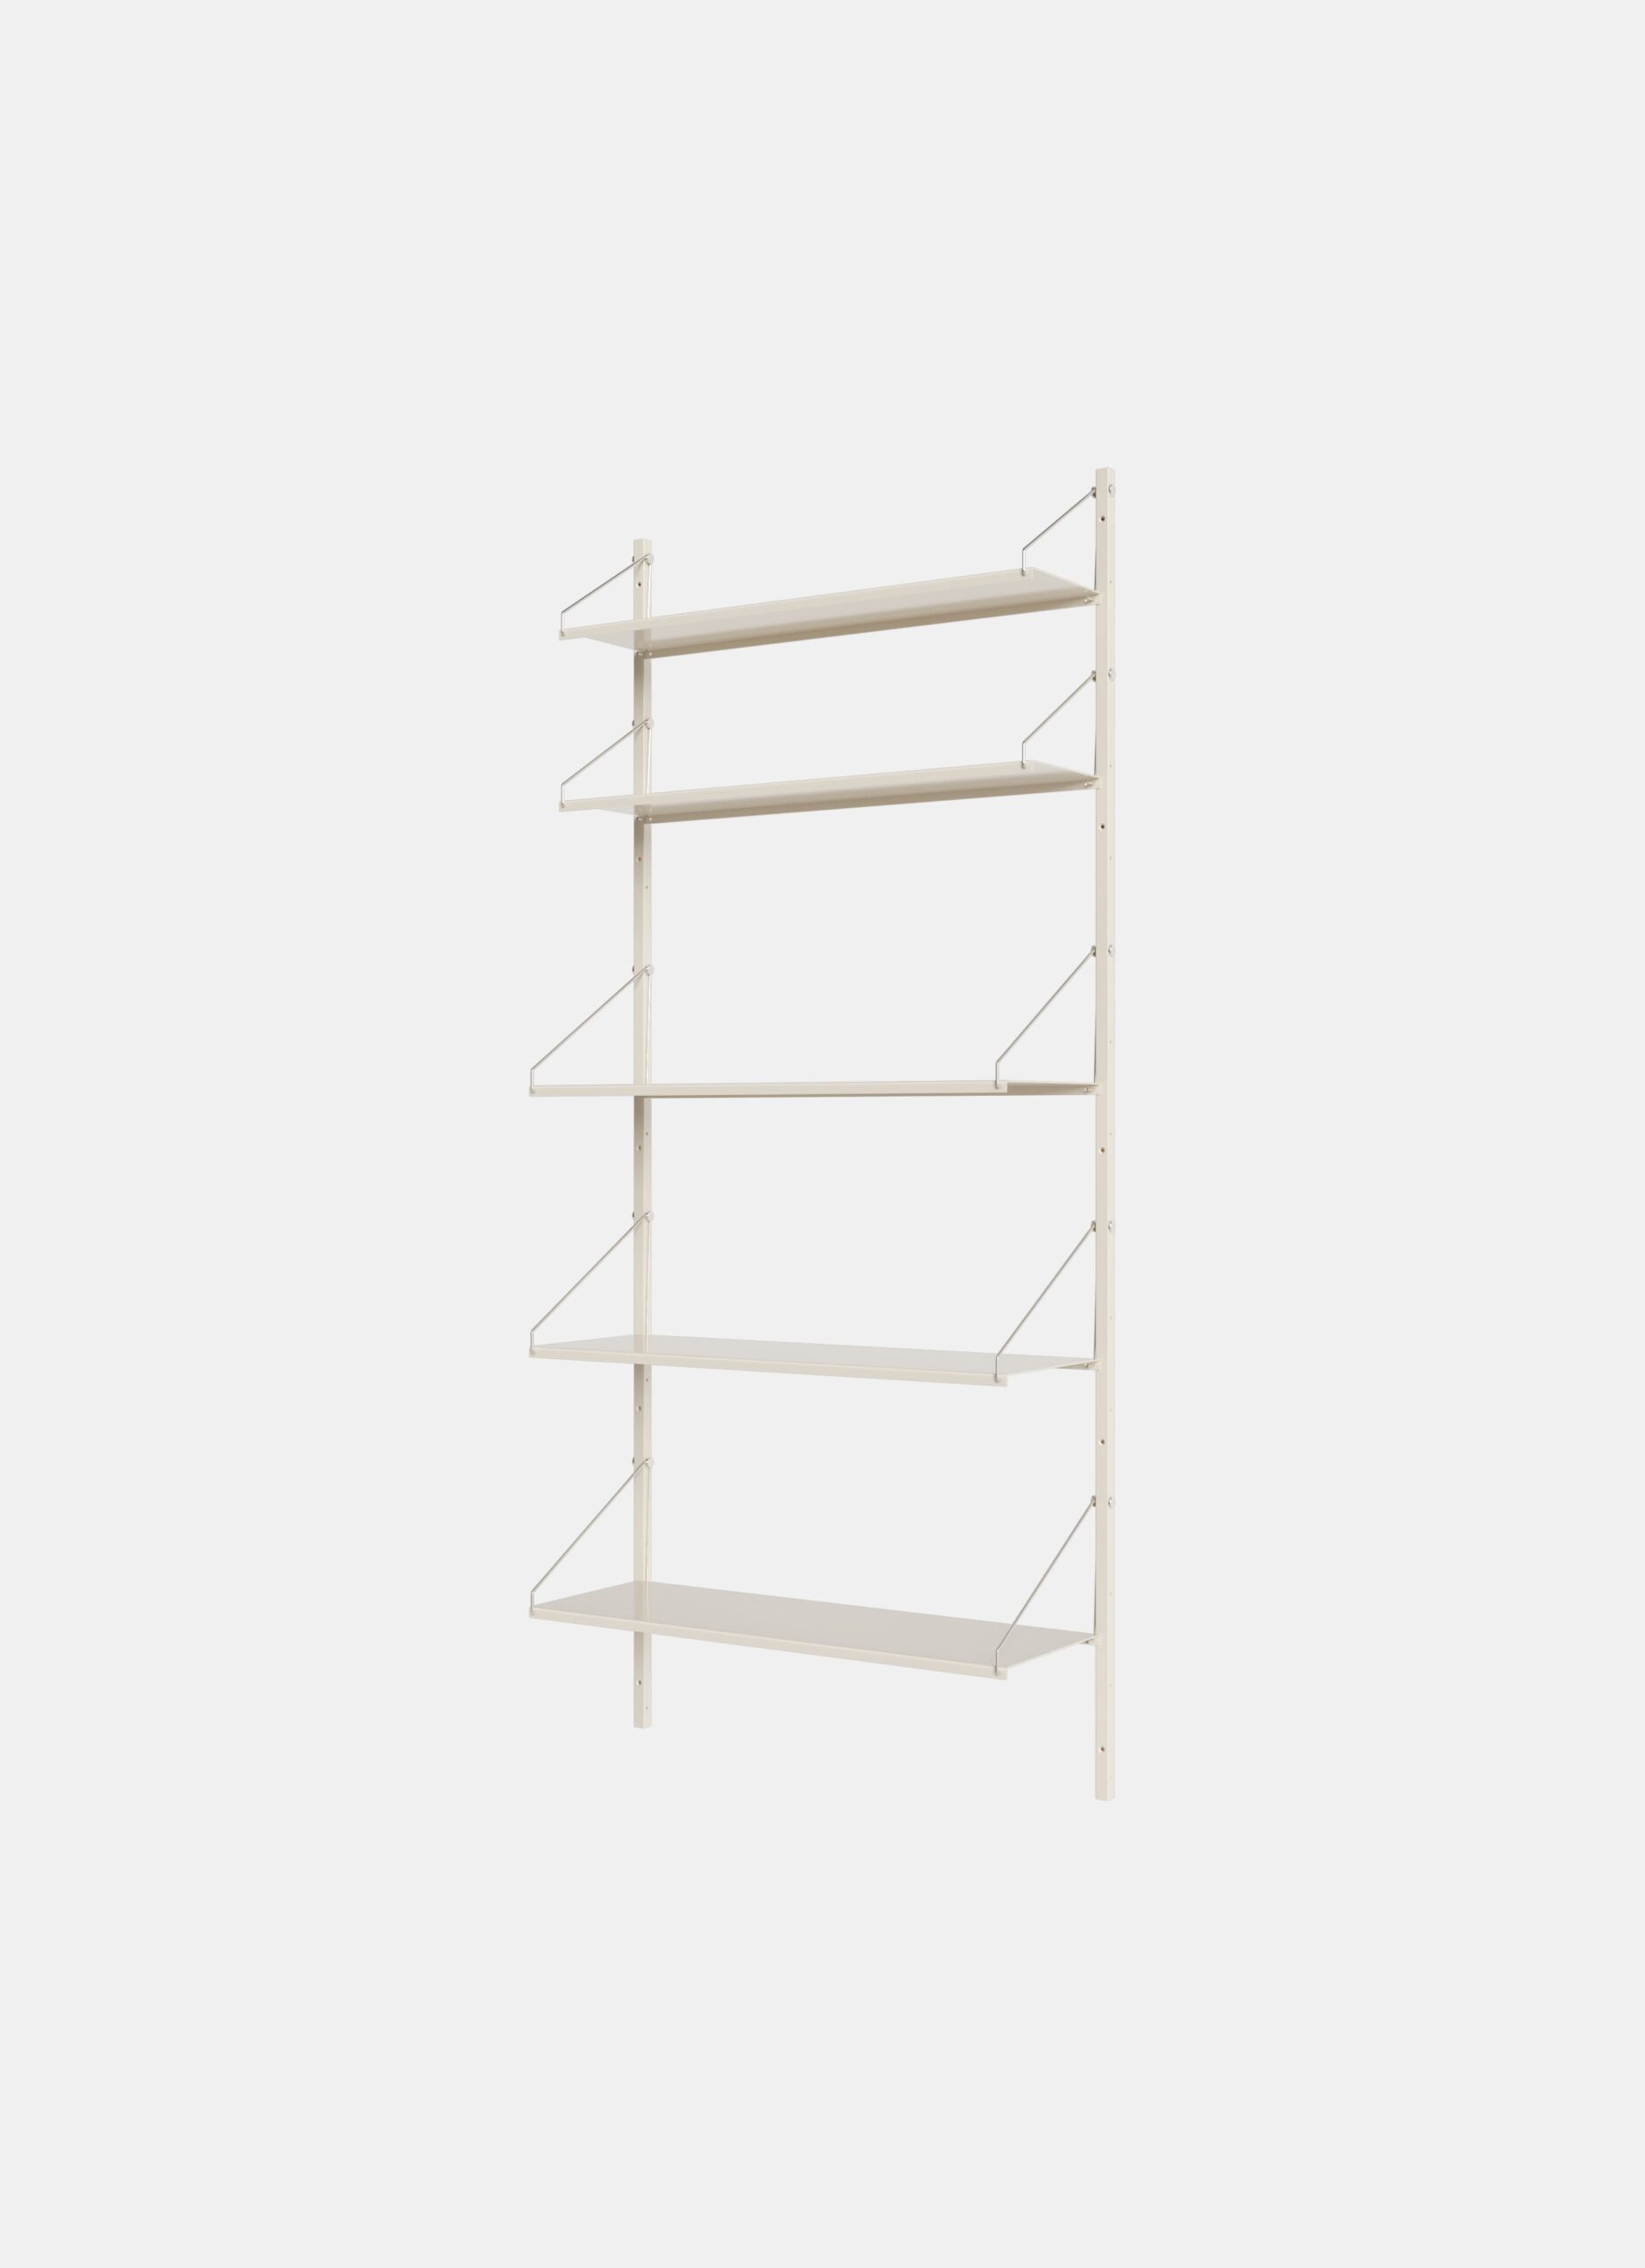 Frama - Shelf Library - Warm White Steel - H1852/W80 - Single Section